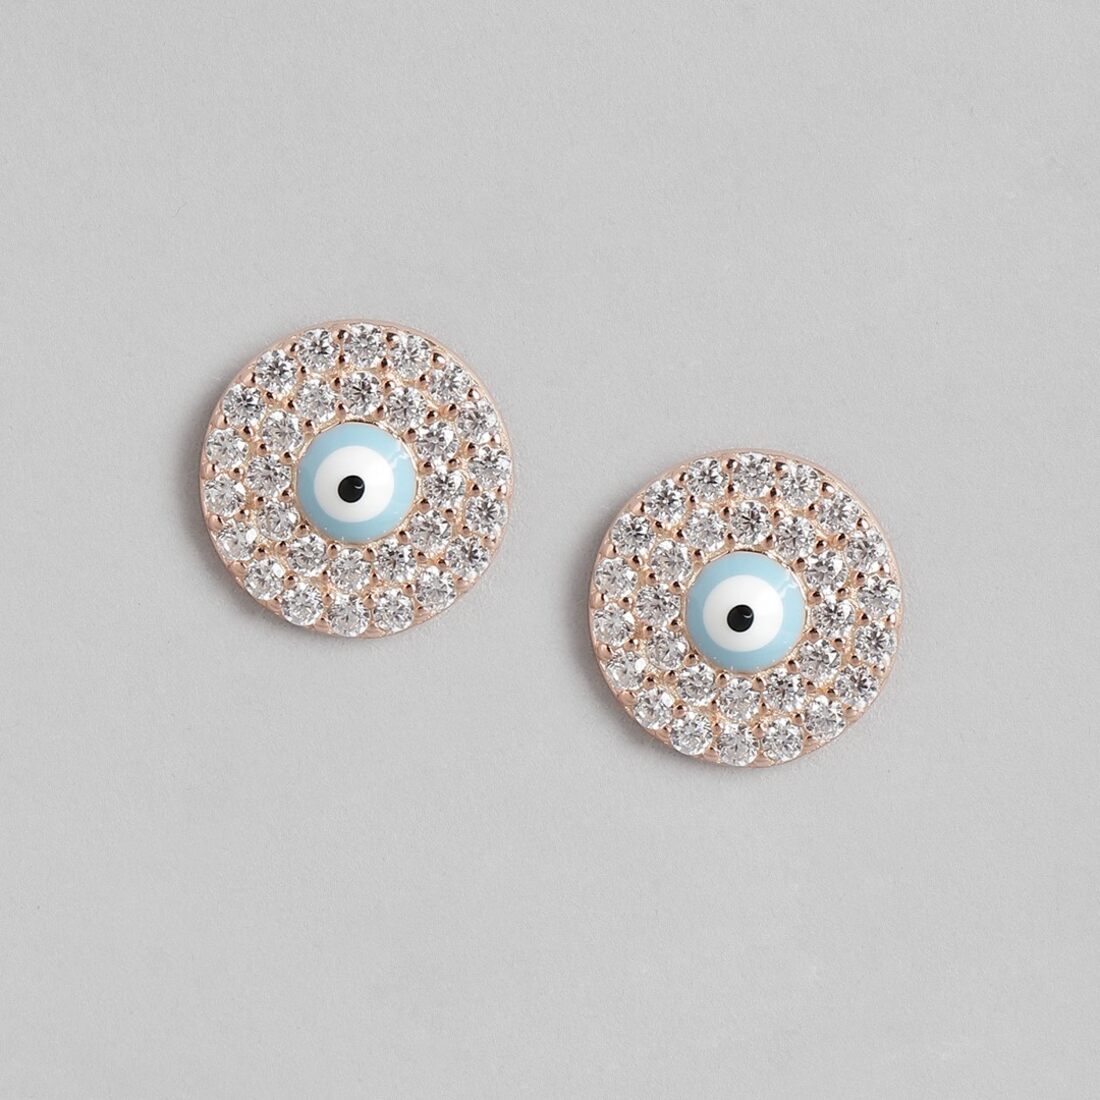 Edgy Evil Eye Cubic Zirconia Studs 925 Silver Earrings in Rose Gold